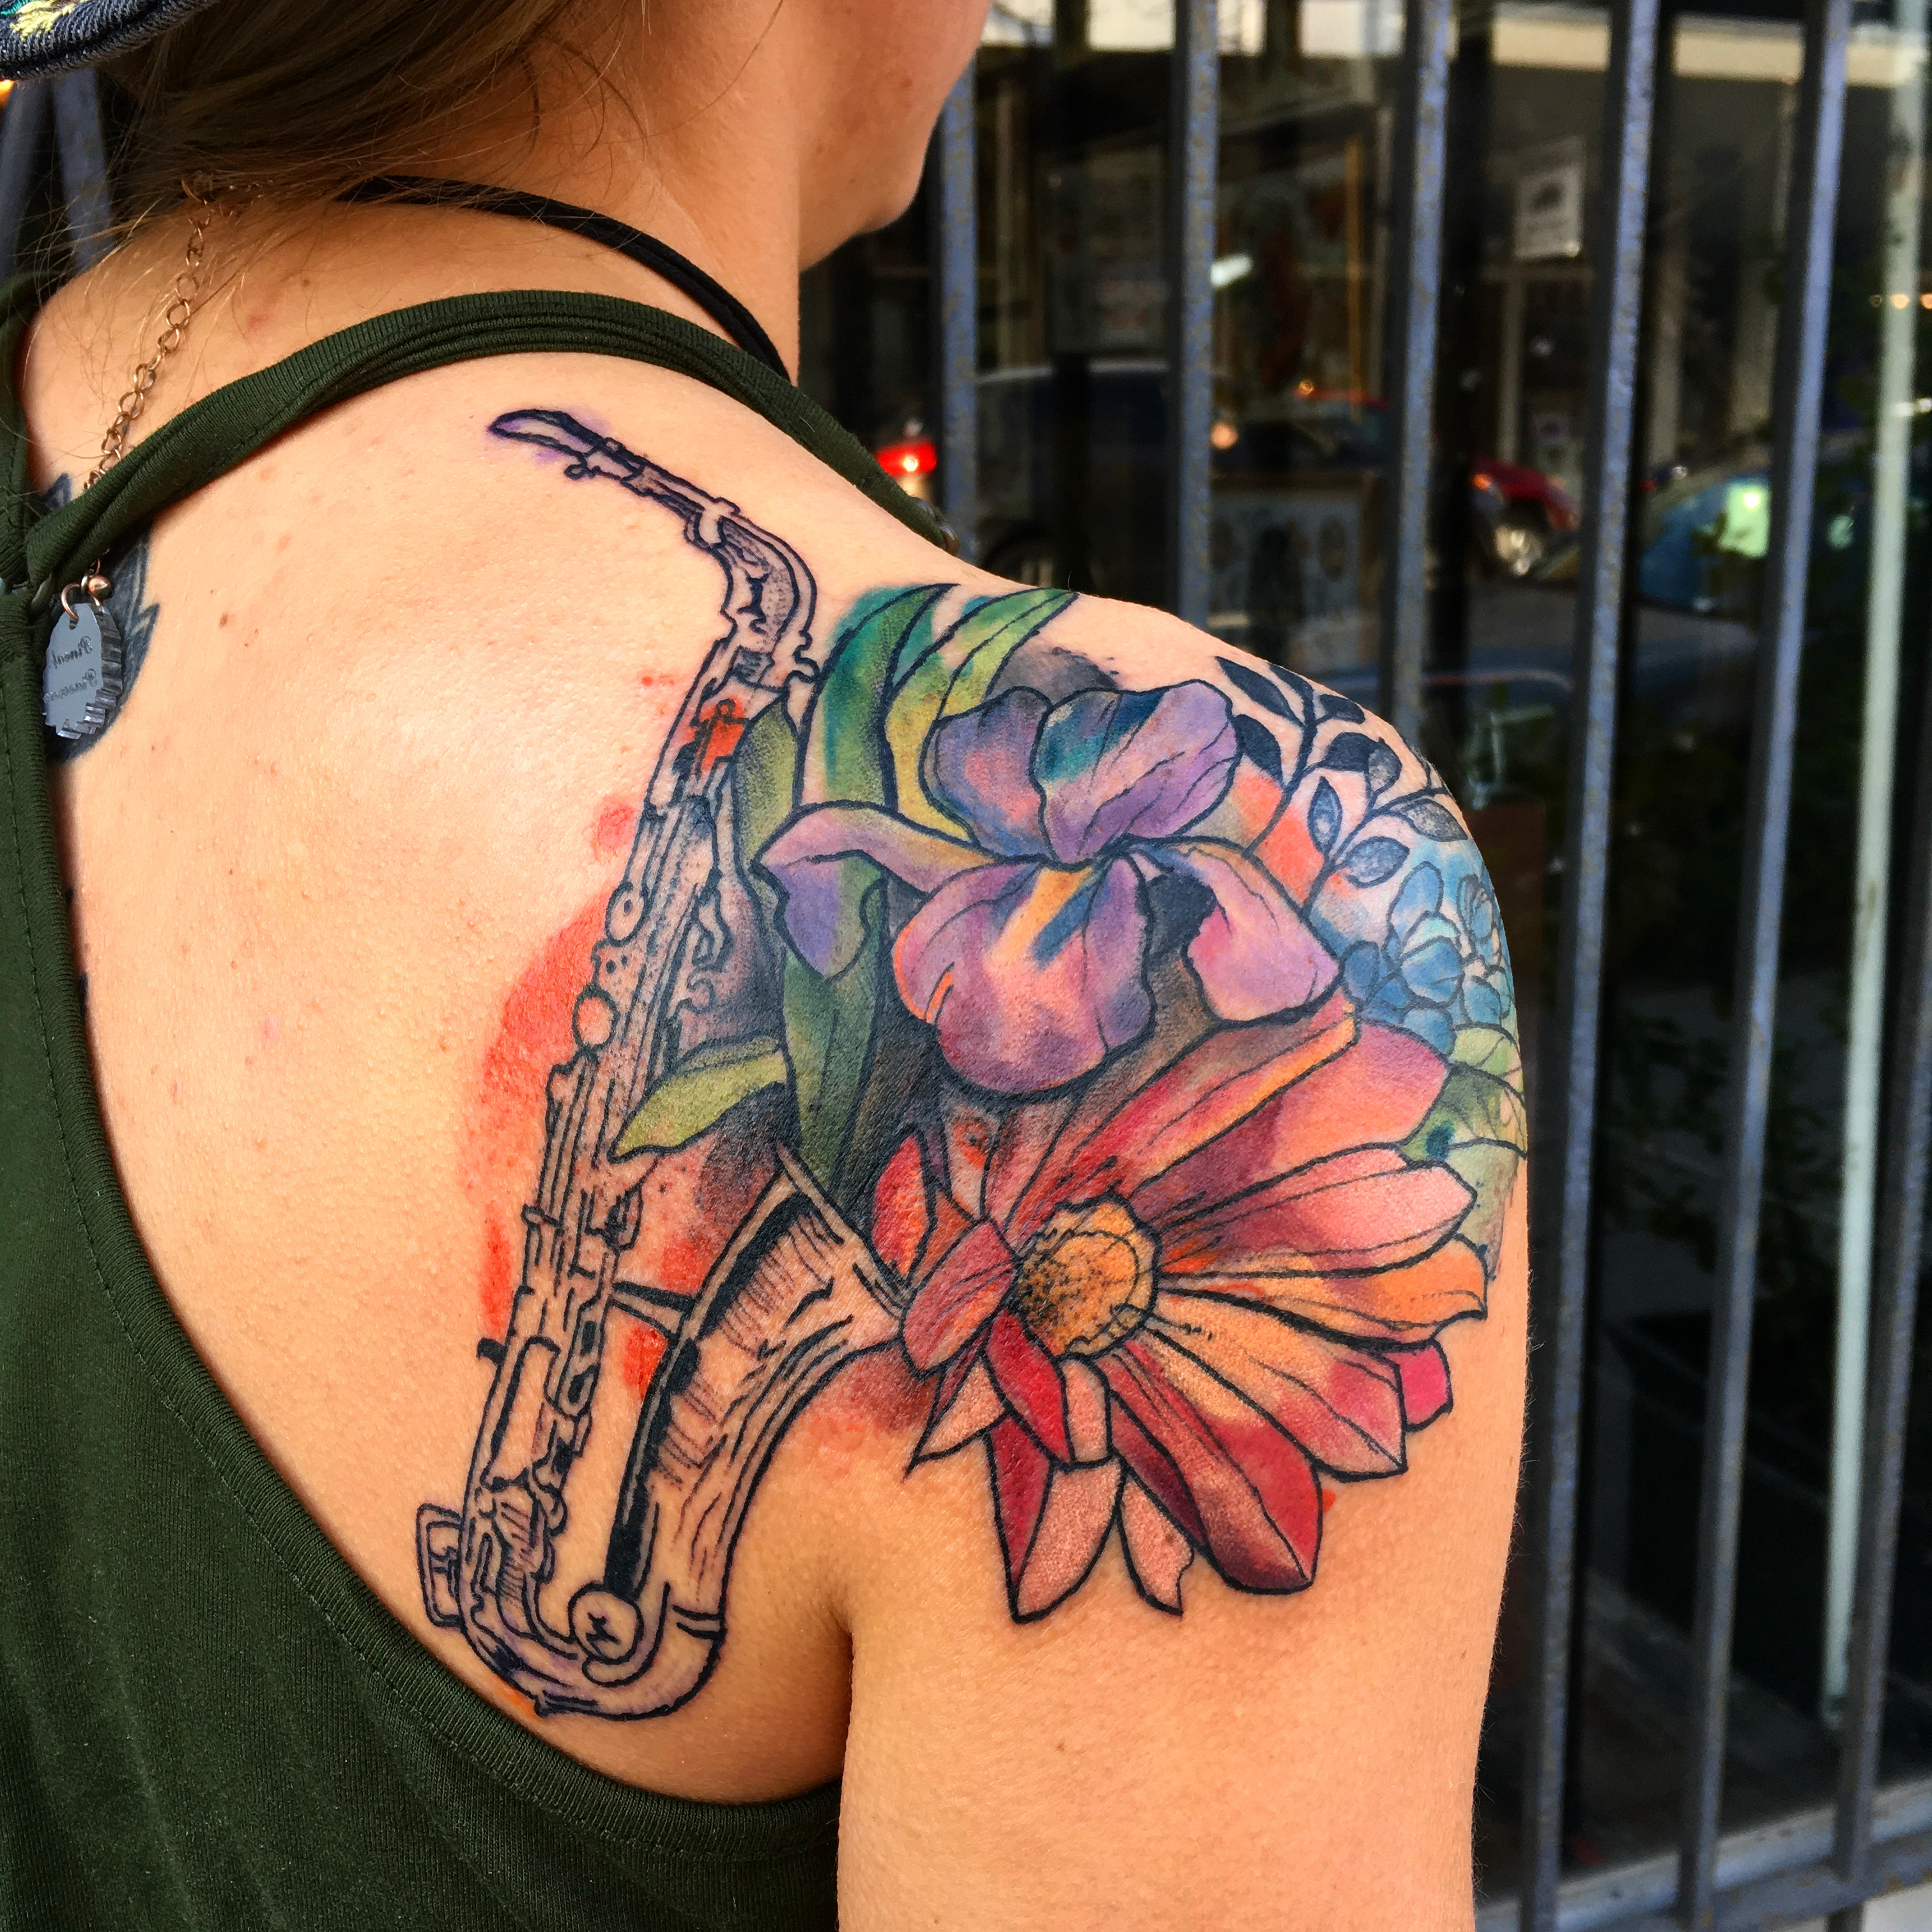 New Orleans tattoo | Tattoos, New orleans tattoo, Lantern tattoo design